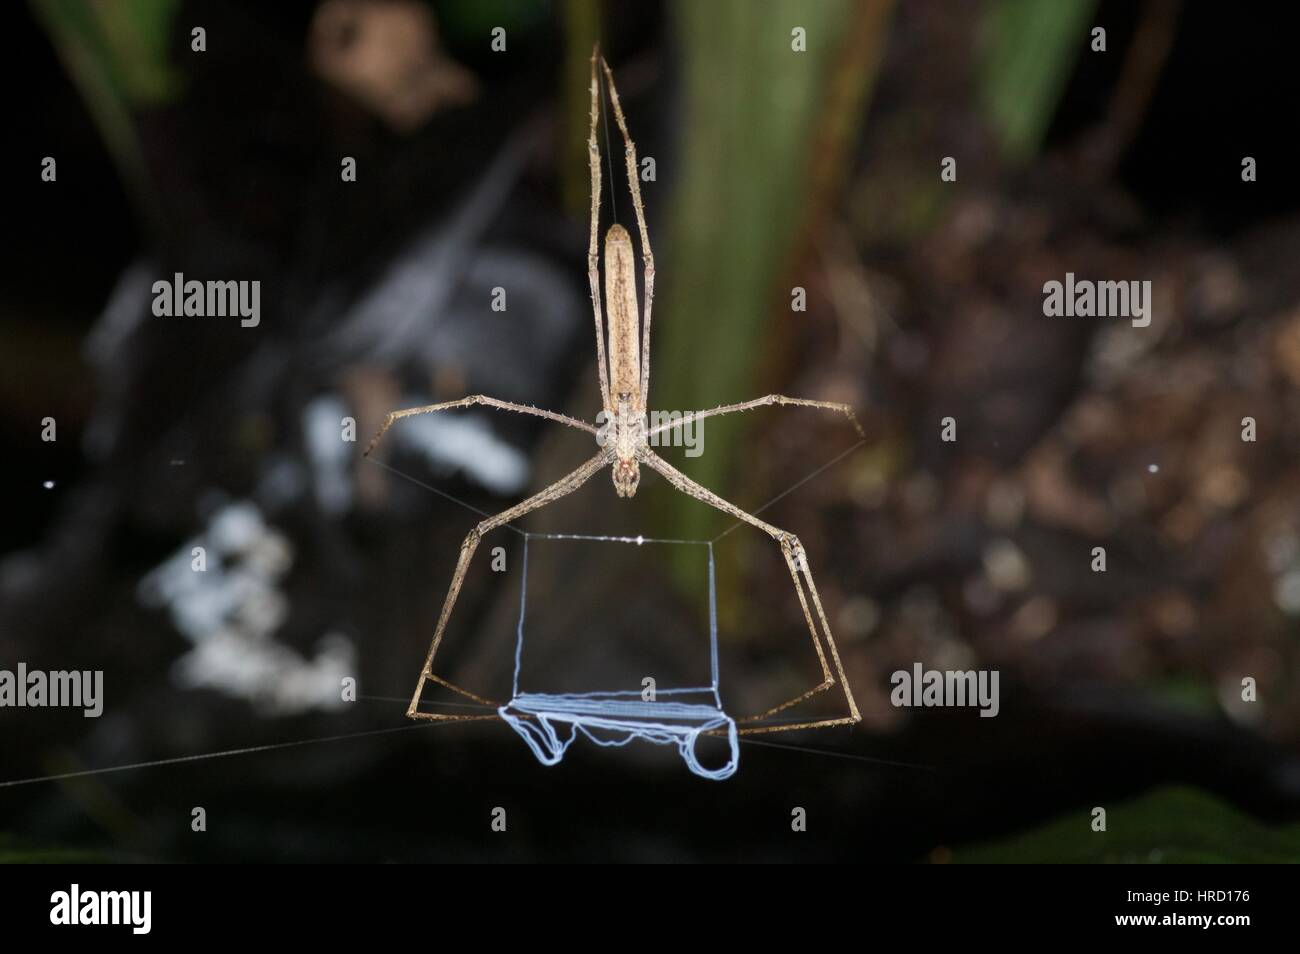 A Net-casting Spider (family Deinopidae) in the Amazon rainforest at night in Loreto, Peru Stock Photo